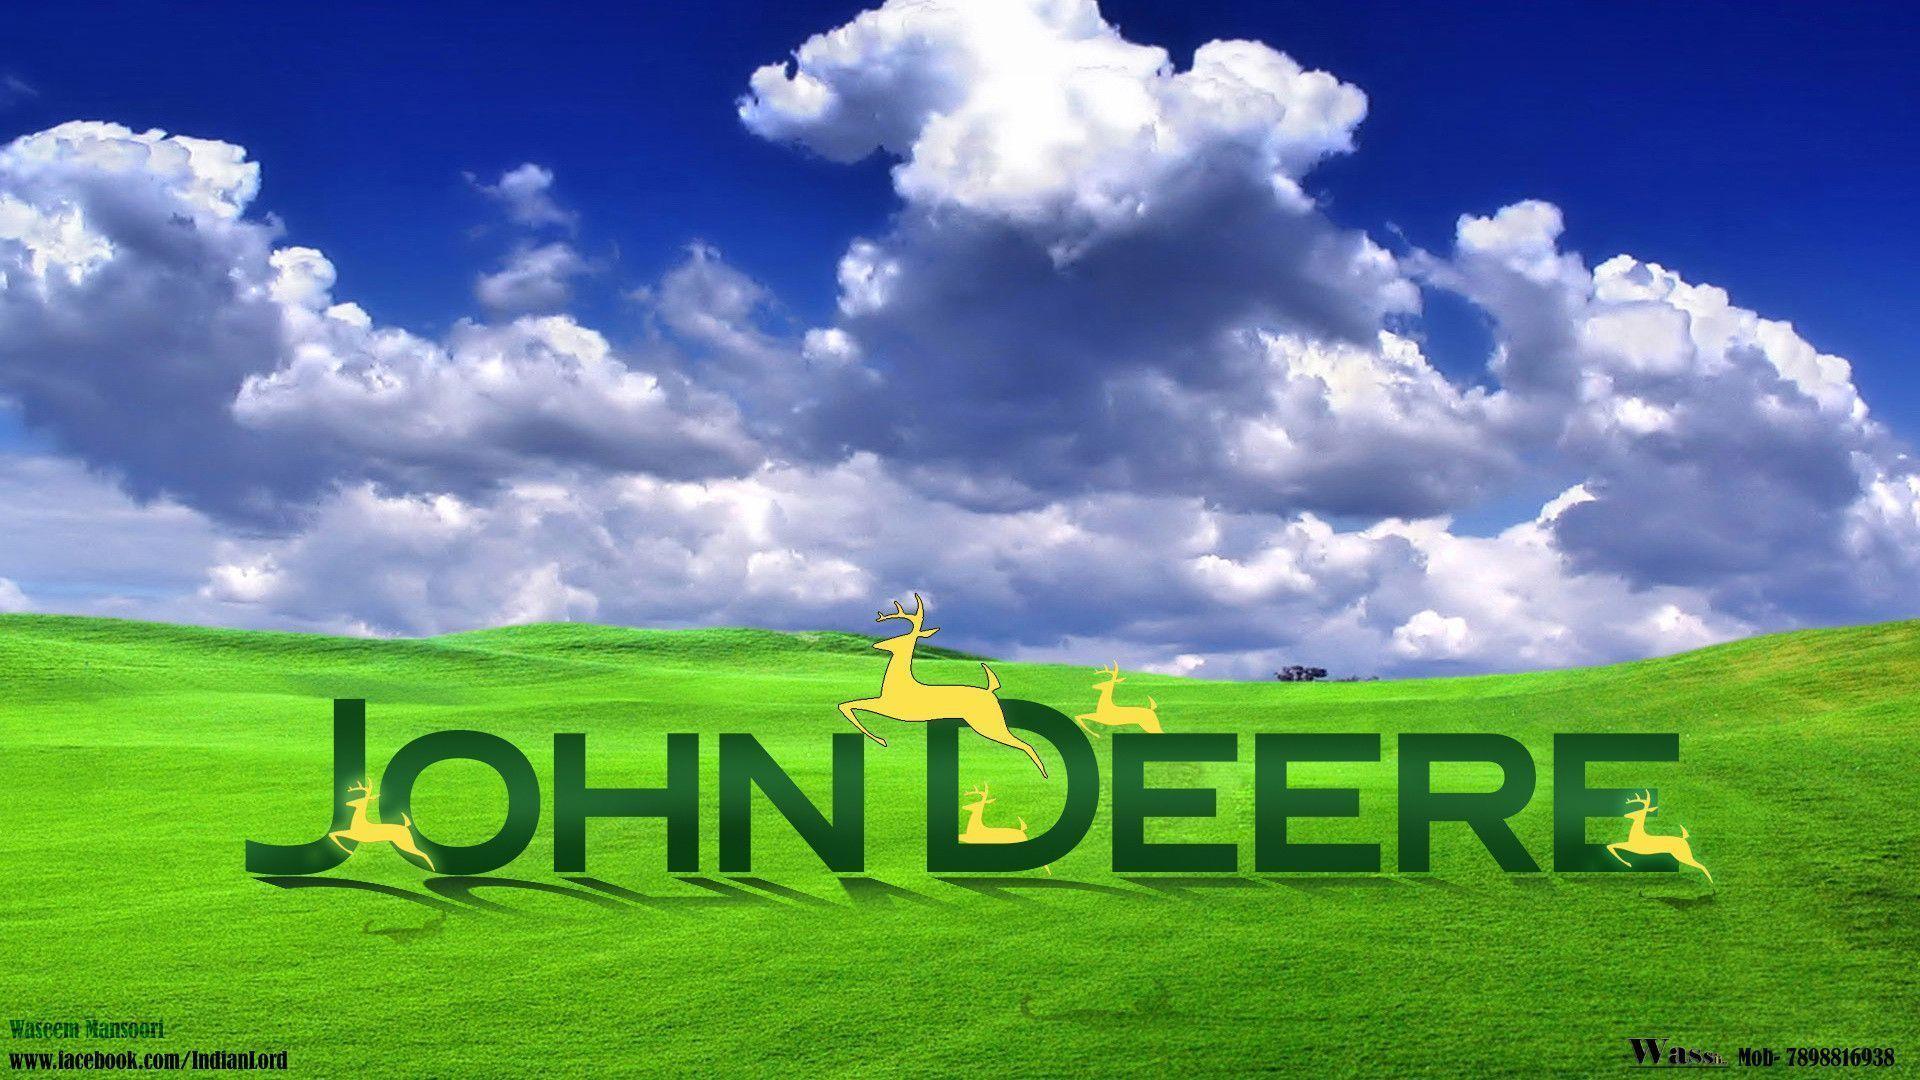 john deere logo wallpaper - Image And Wallpaper free to